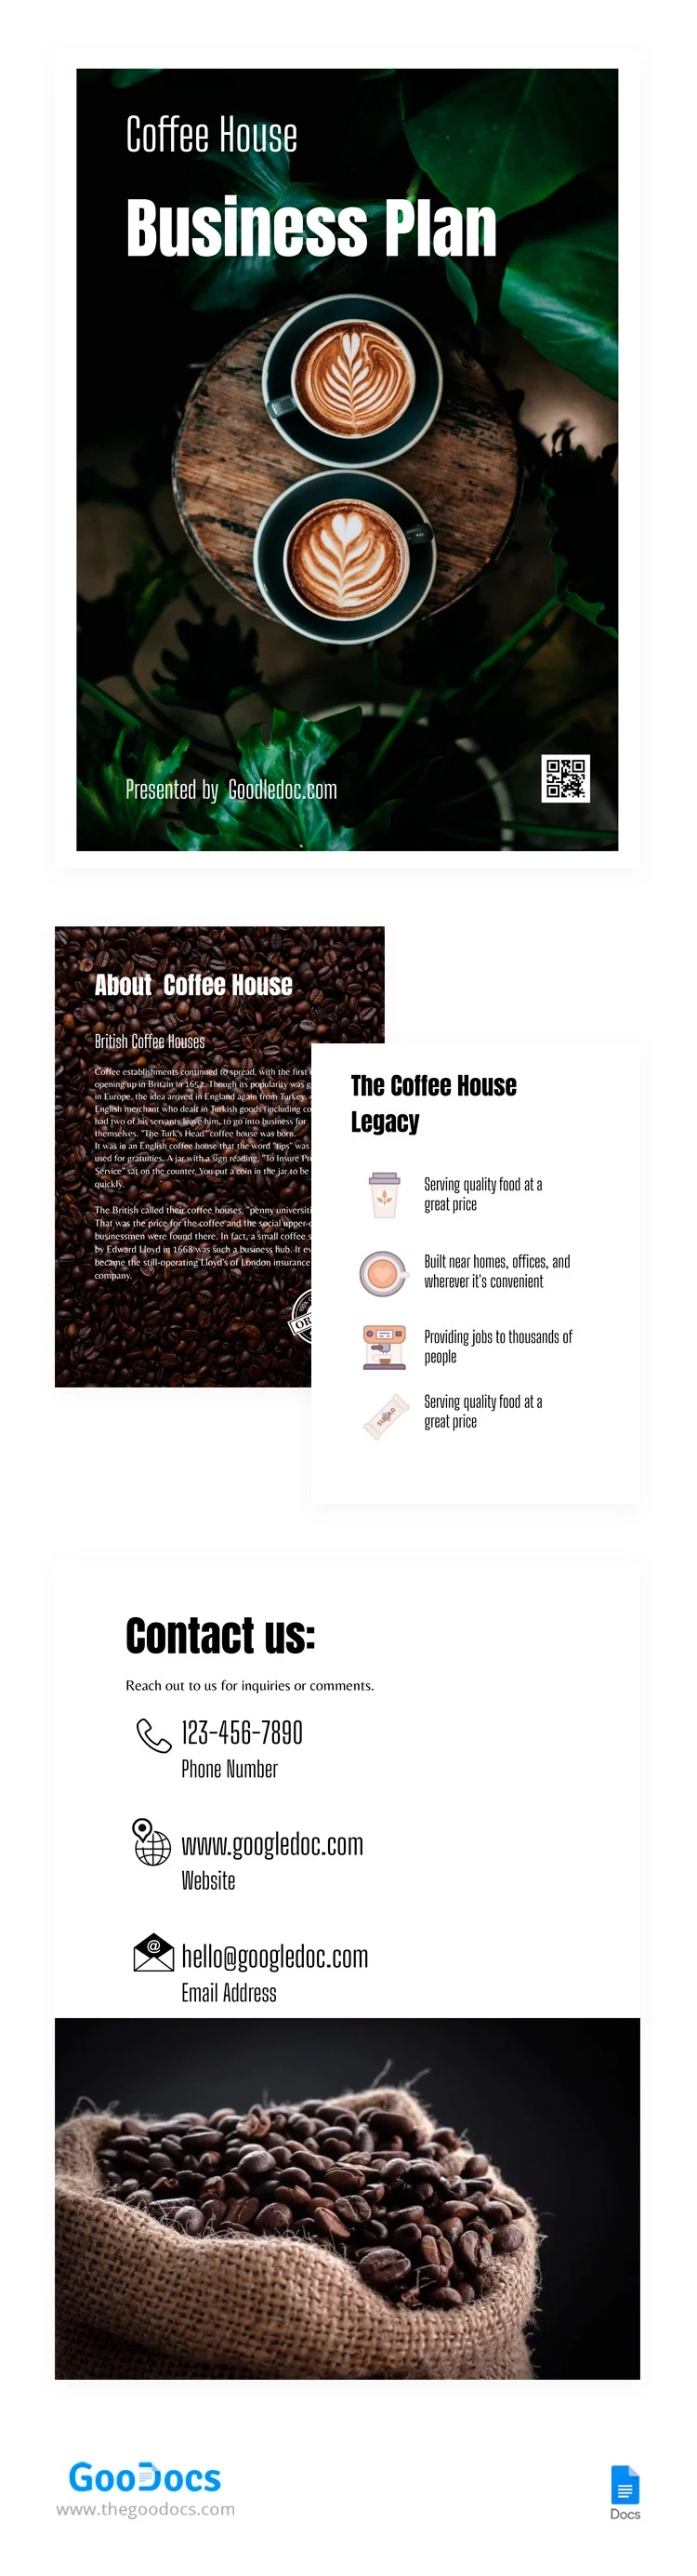 Plan de Negocios de Café - free Google Docs Template - 10062909